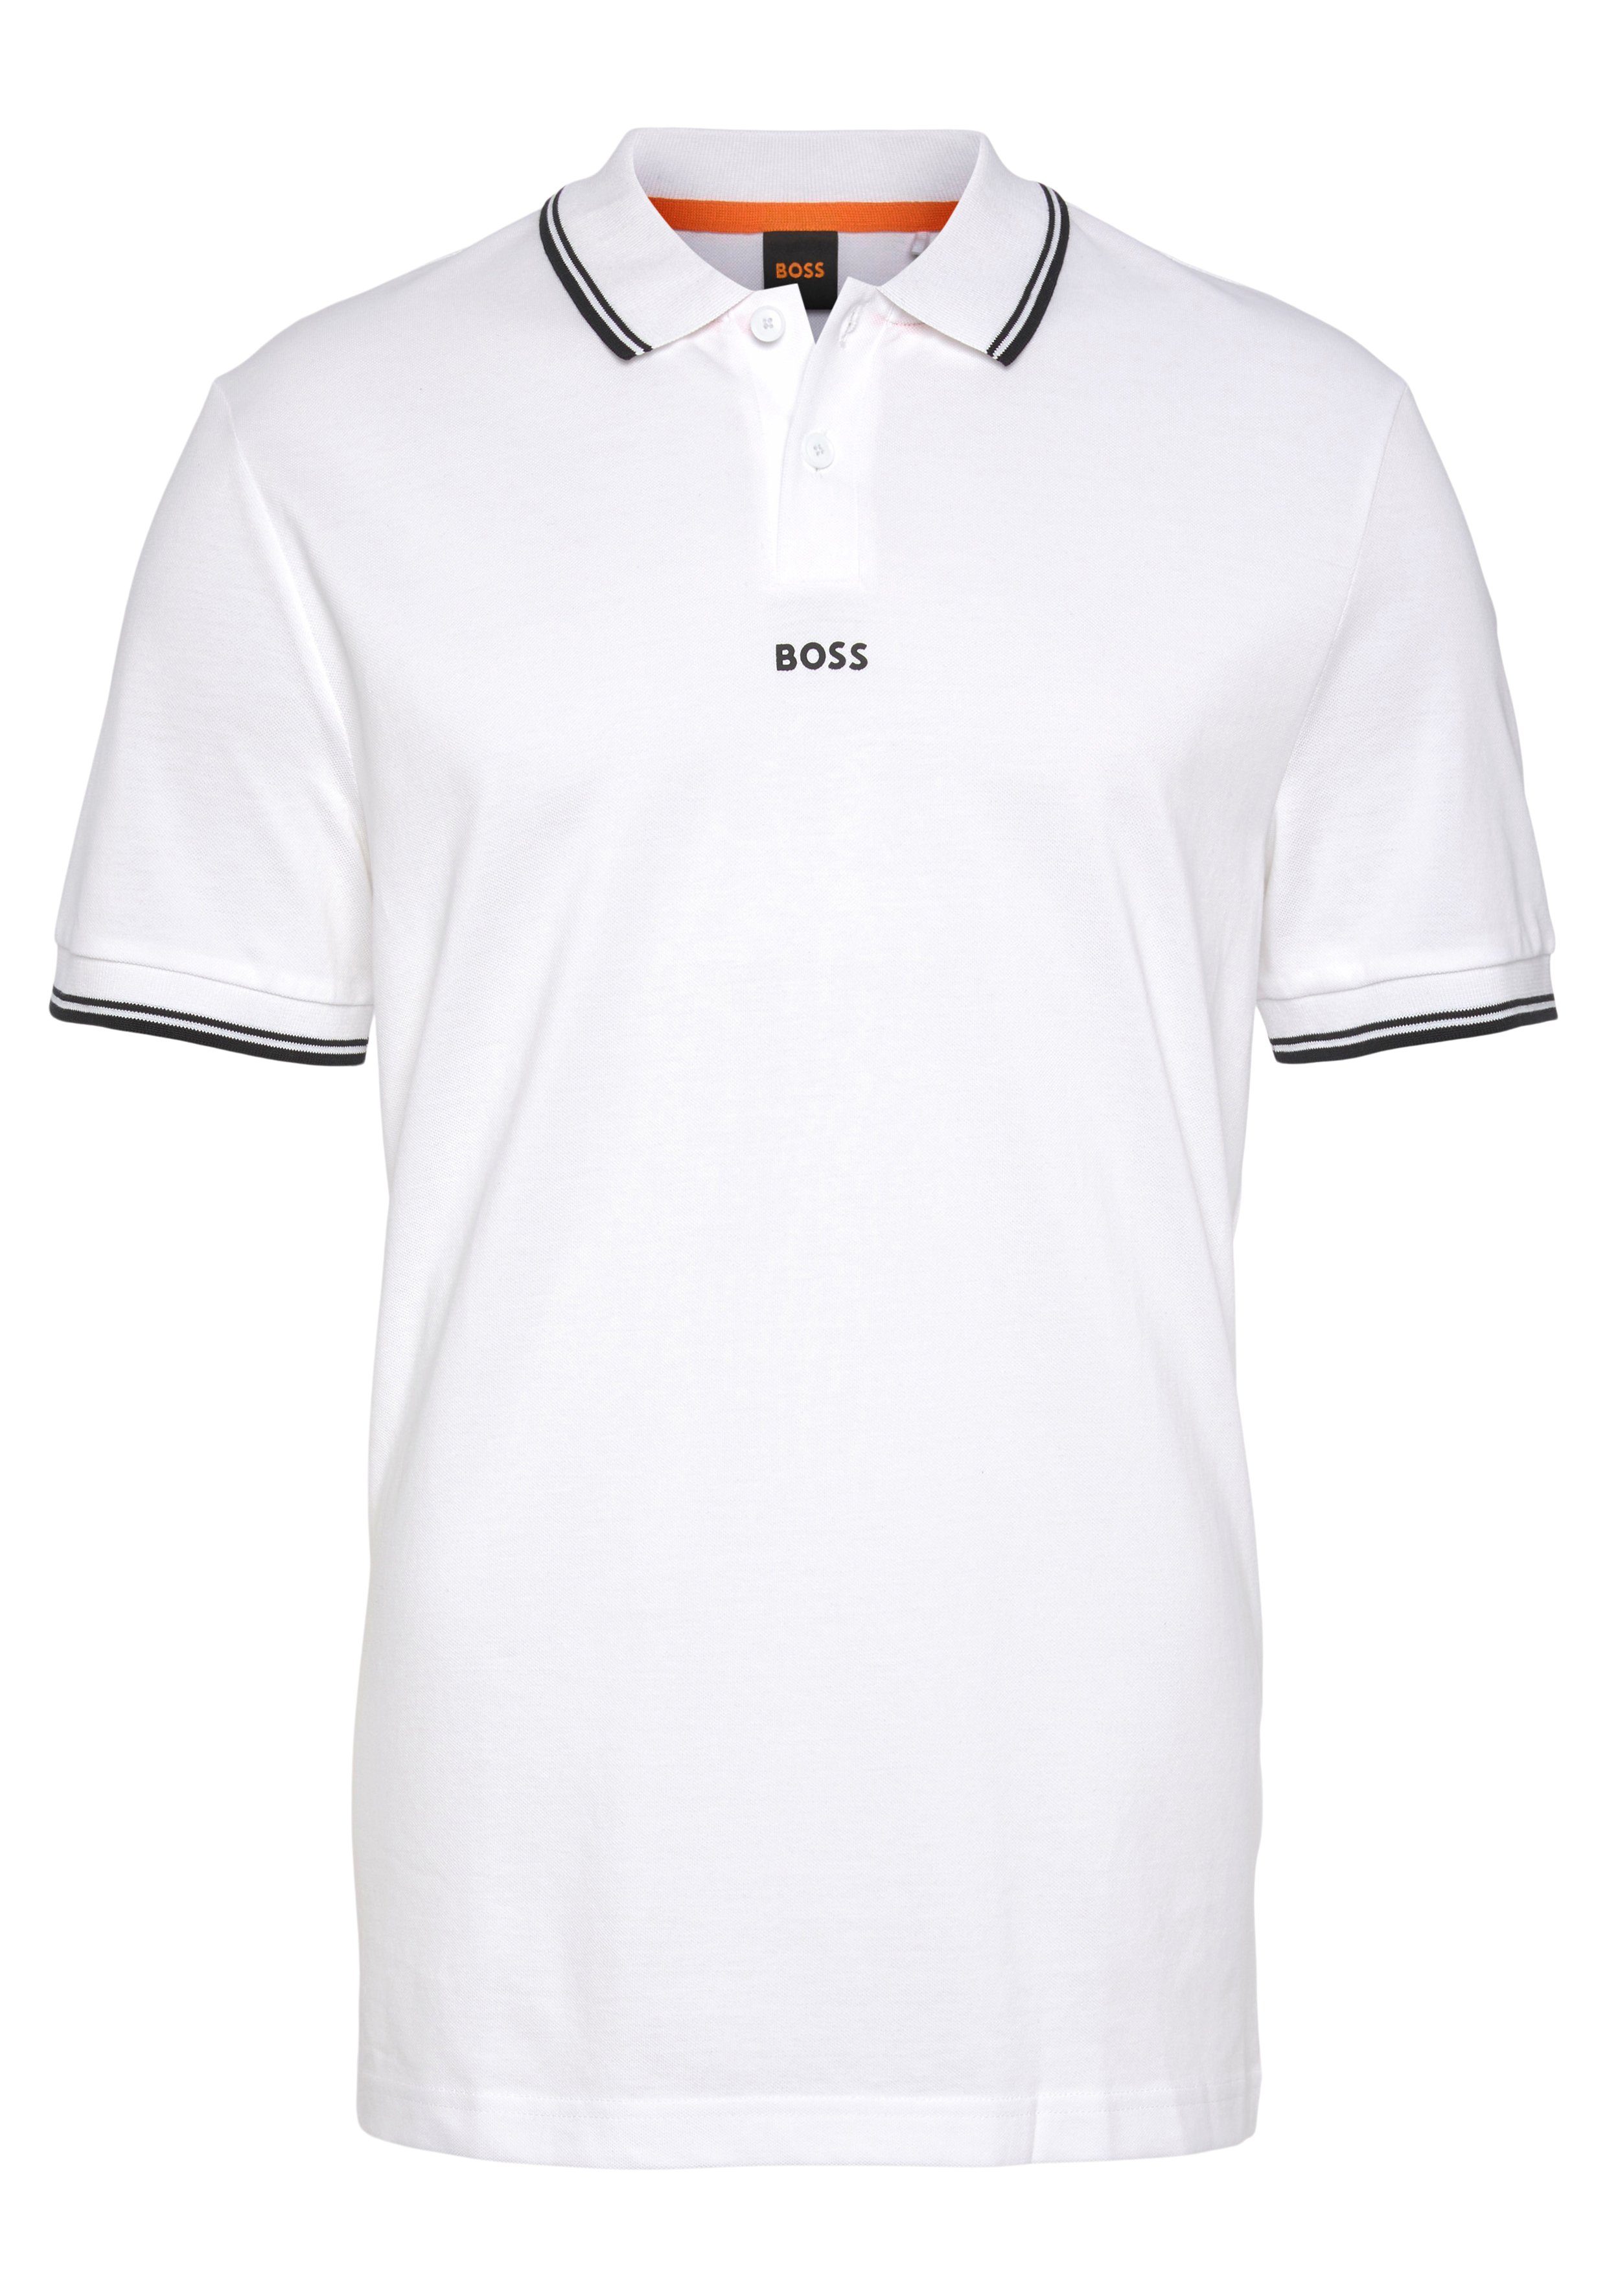 ORANGE mit Logo BOSS weiß Poloshirt gedrucktem PChup